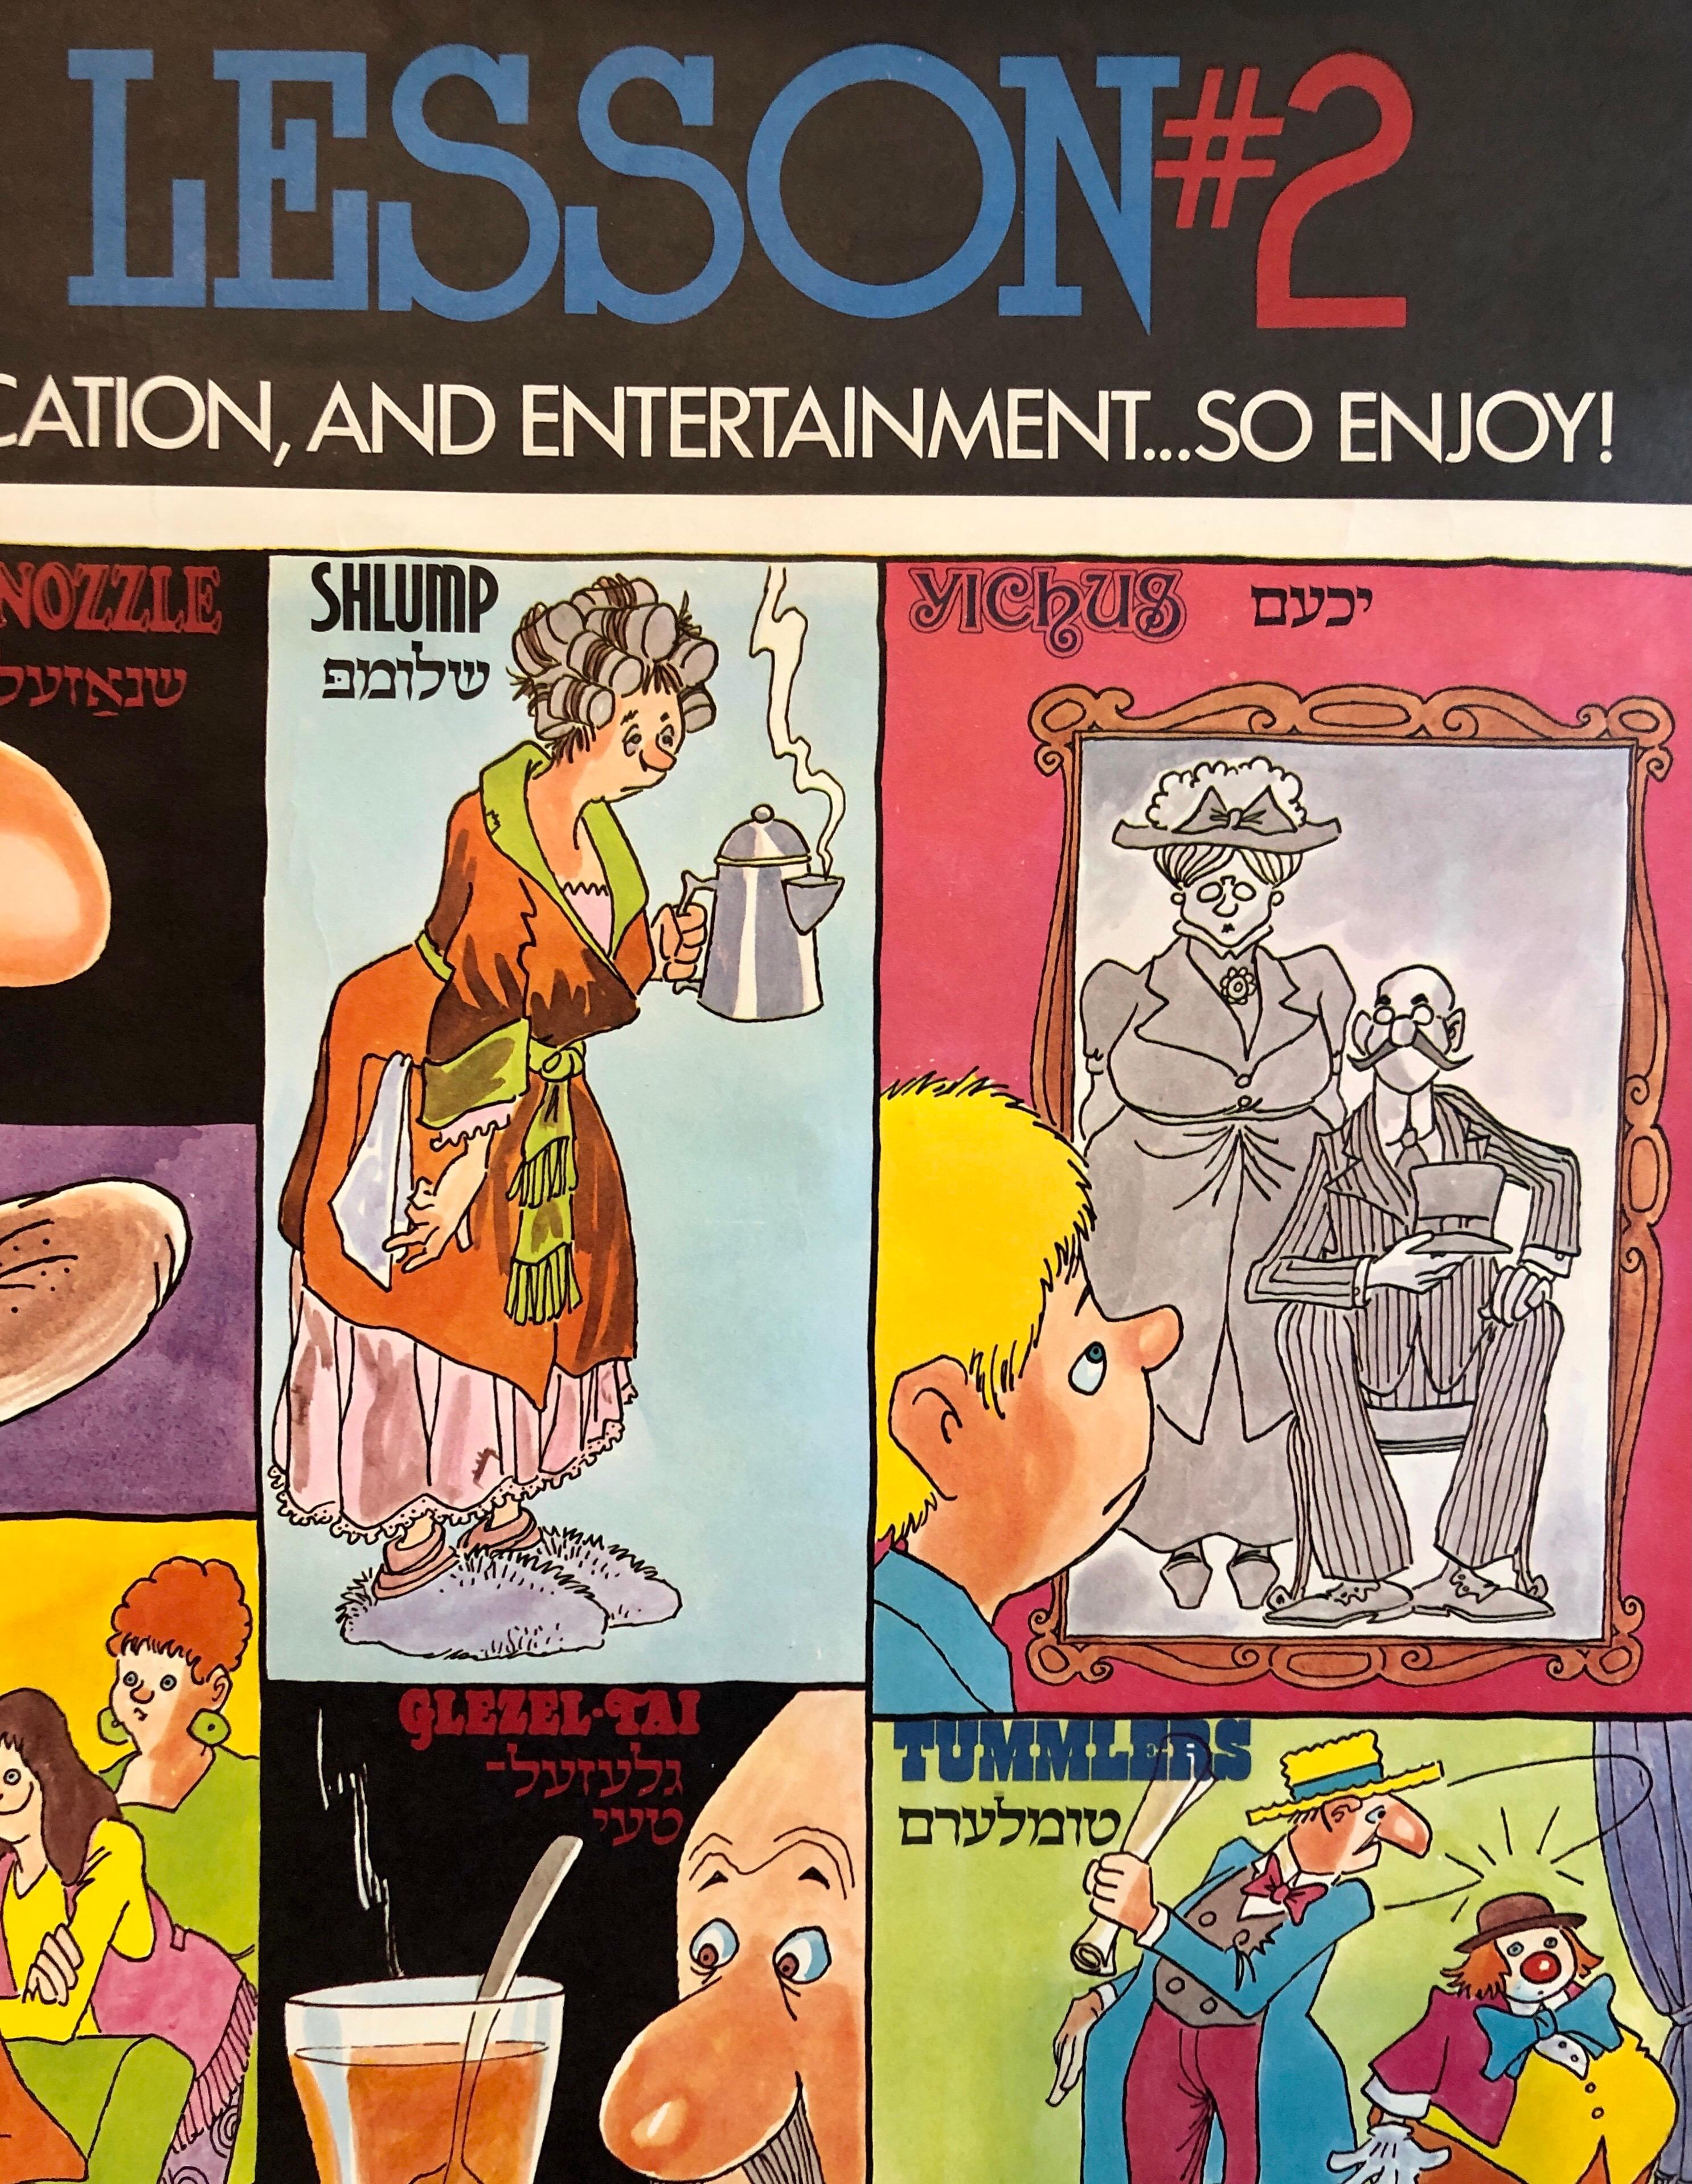 Rare Pop Art Al Scaduto Vintage Poster Yiddish lesson 1973 Humorous Judaica Art 4